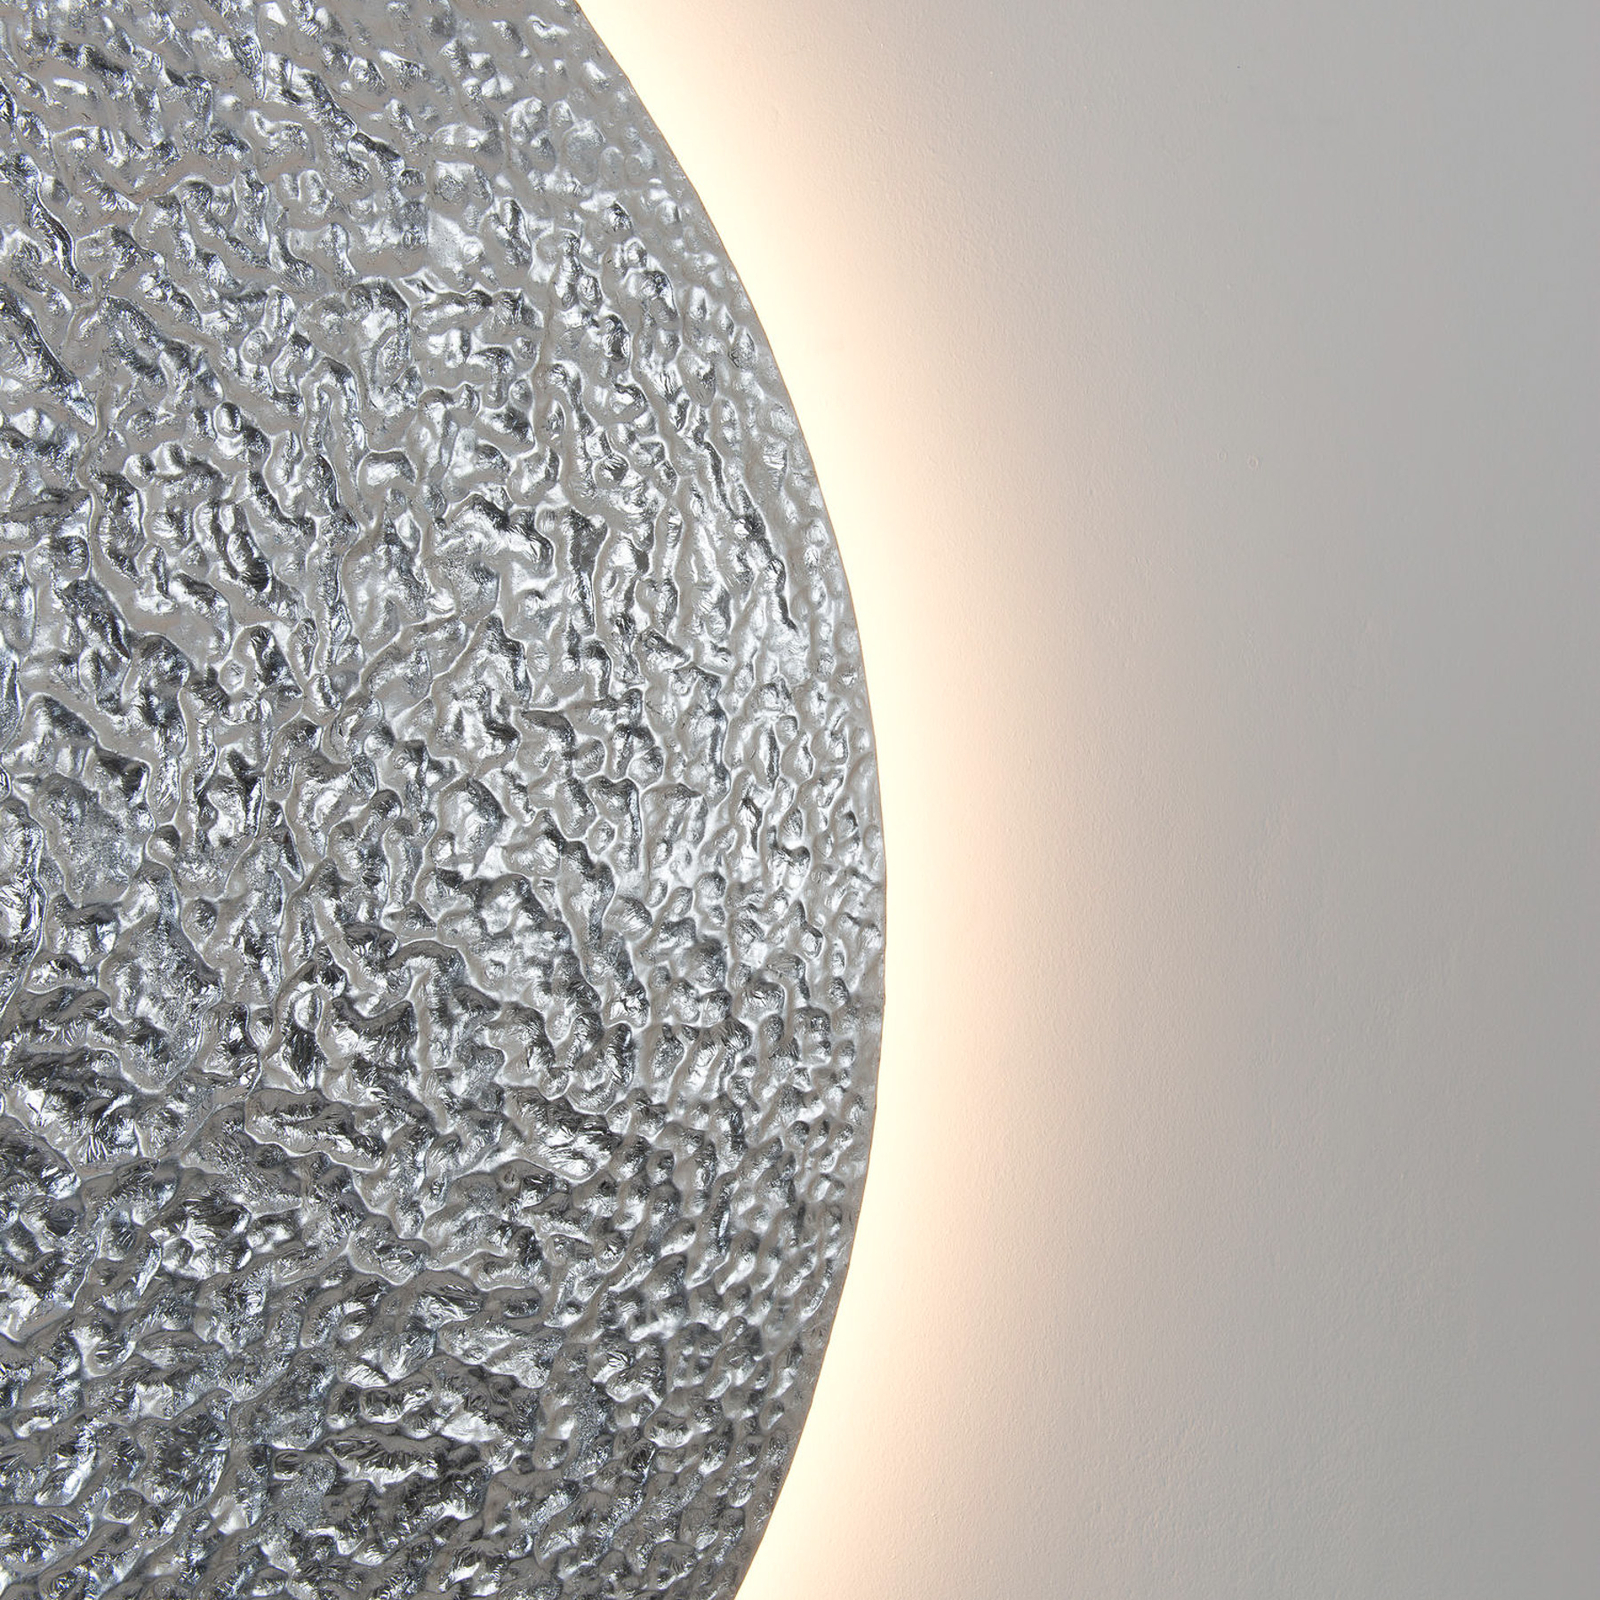 LED-vägglampa Meteor, silverfärgad, Ø 100 cm, järn